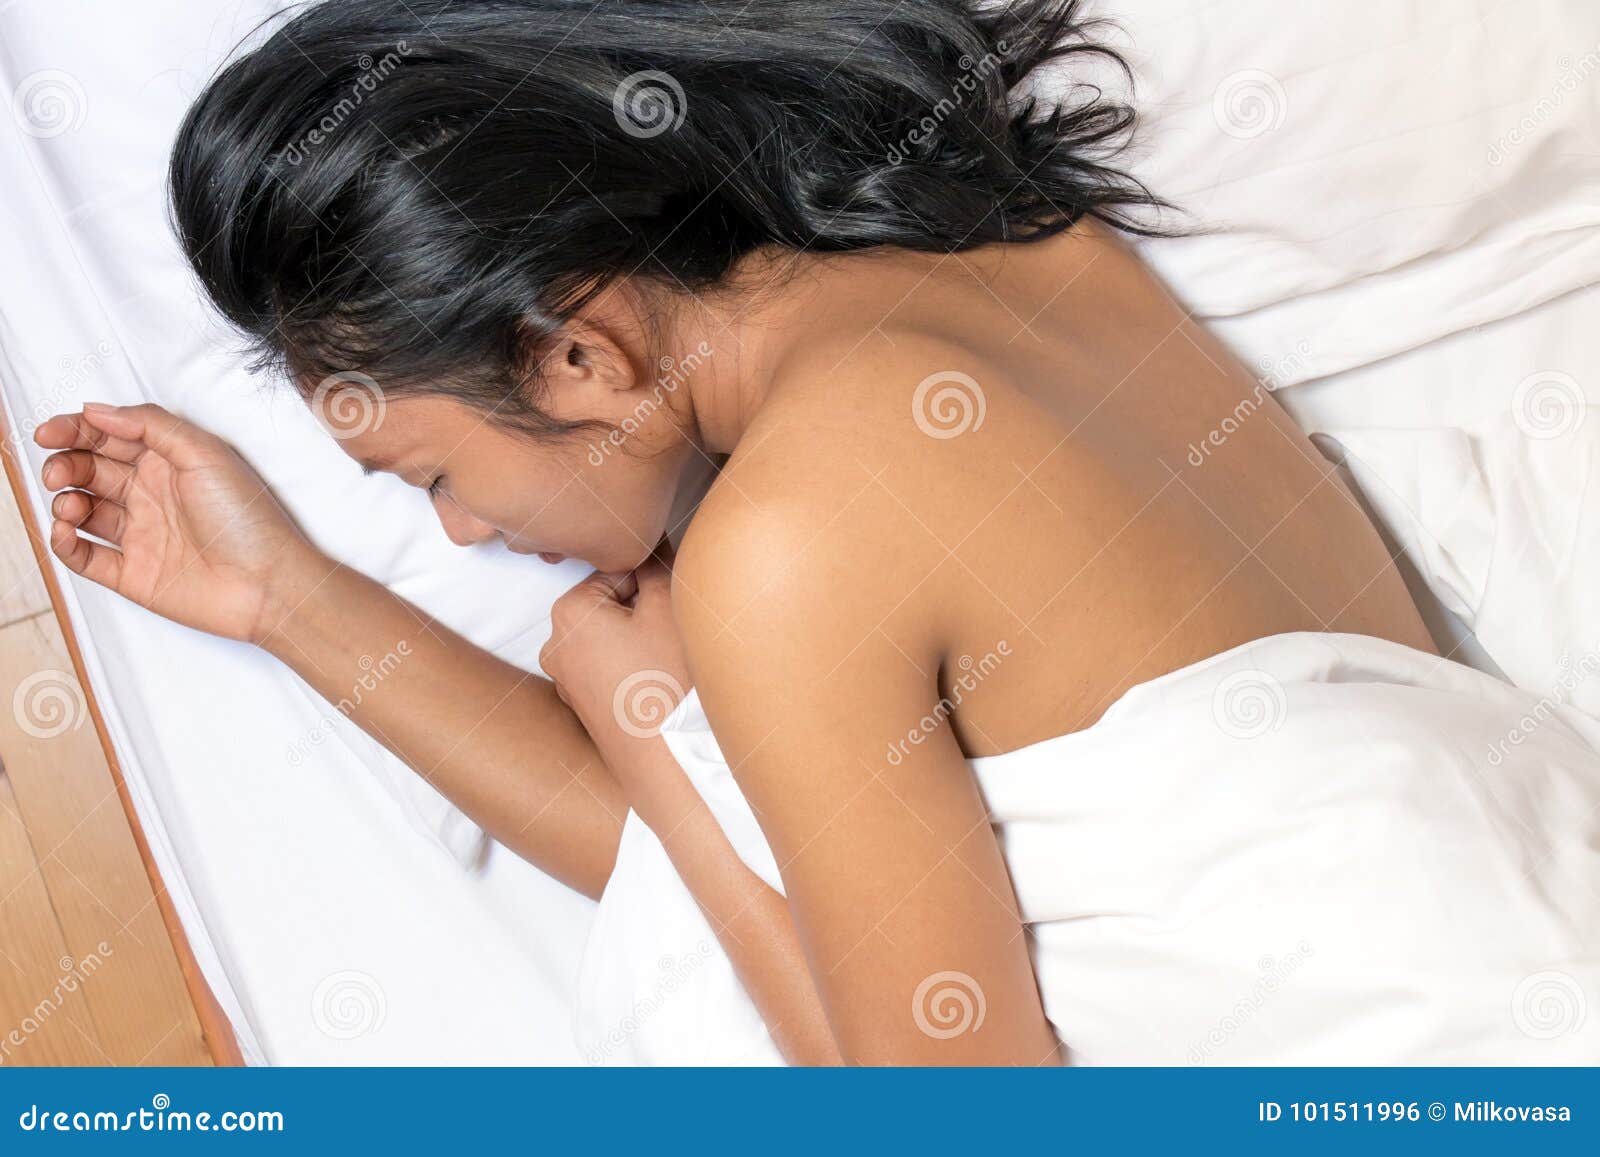 Bedtime Nude Woman